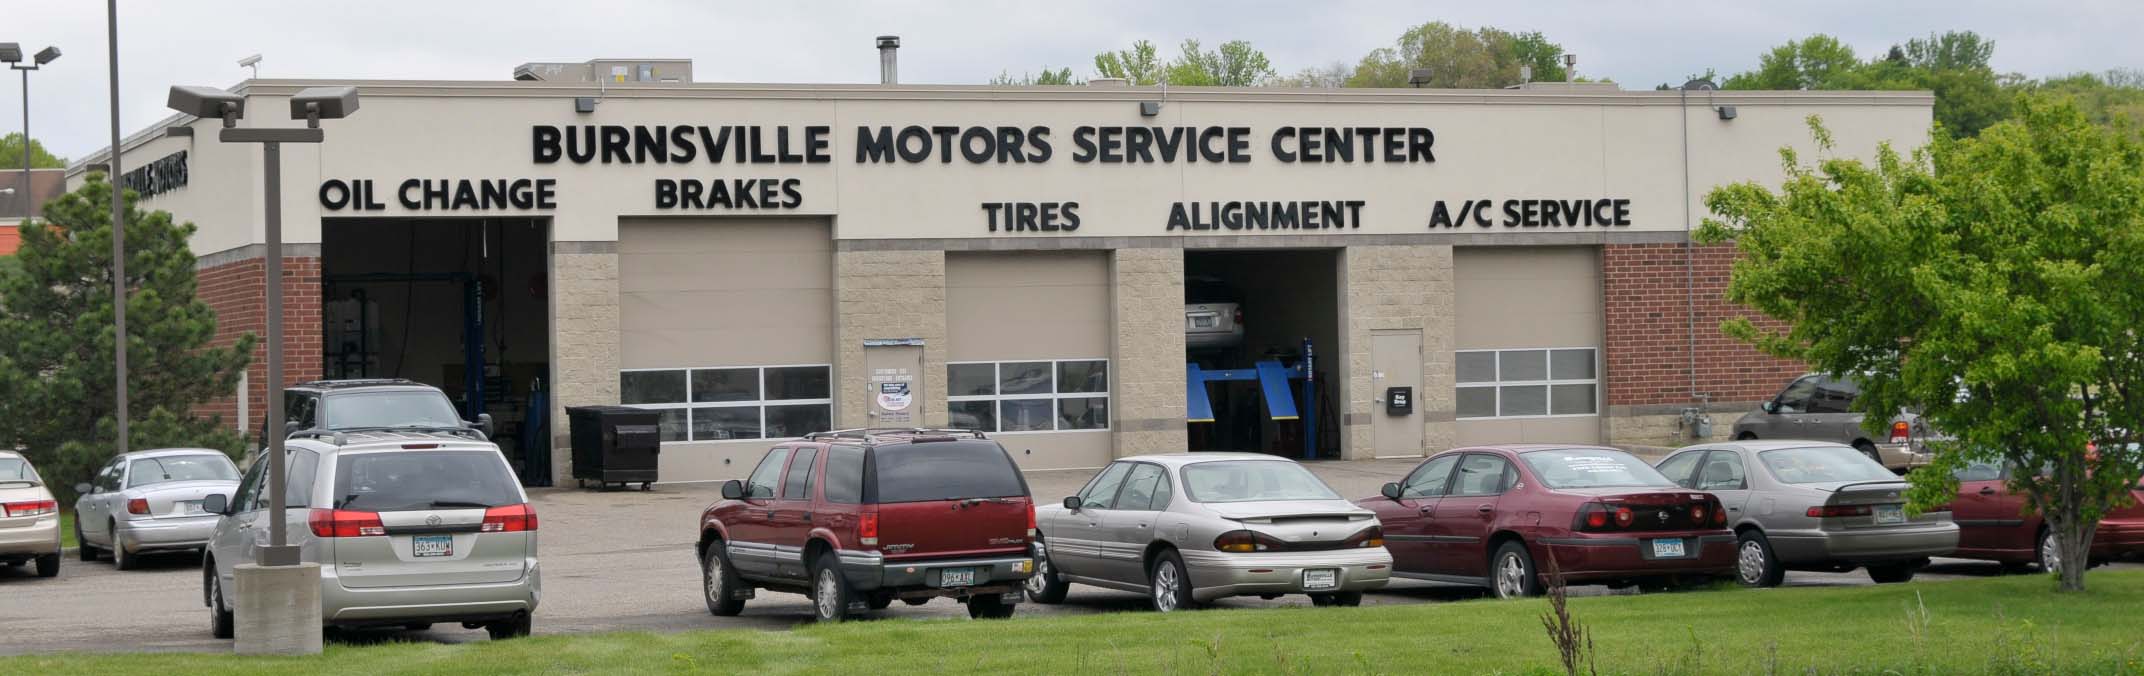 Service center at Burnsville Motors